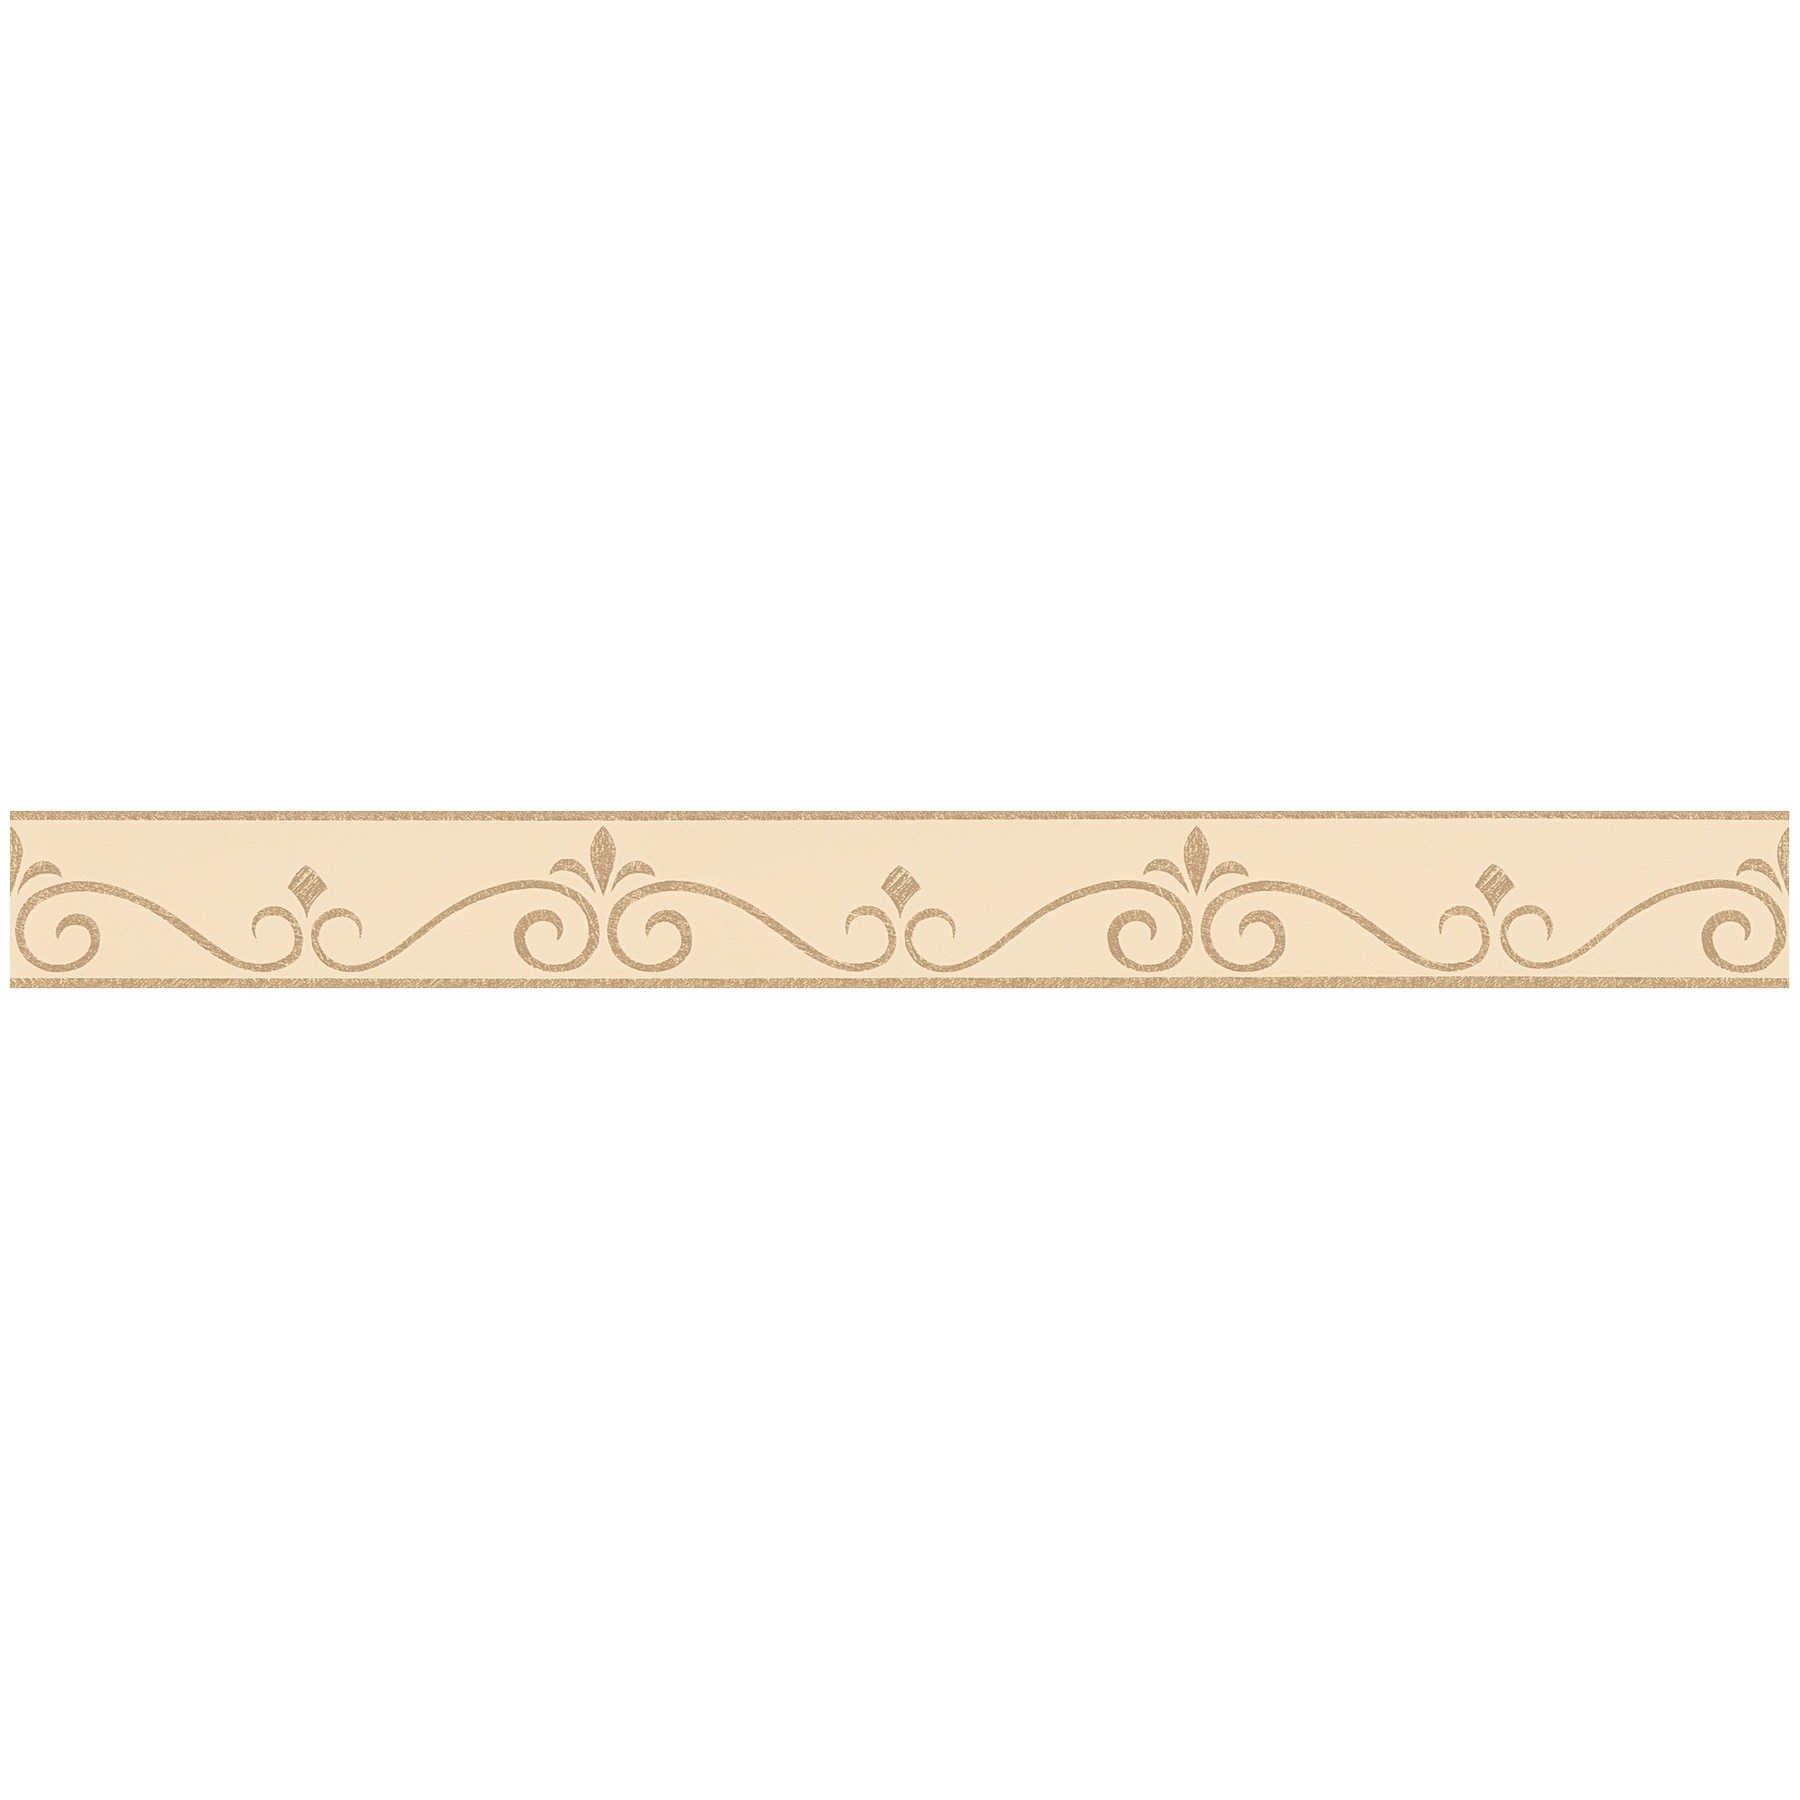         Wallpaper border ornaments with filigree pattern - metallic, beige
    